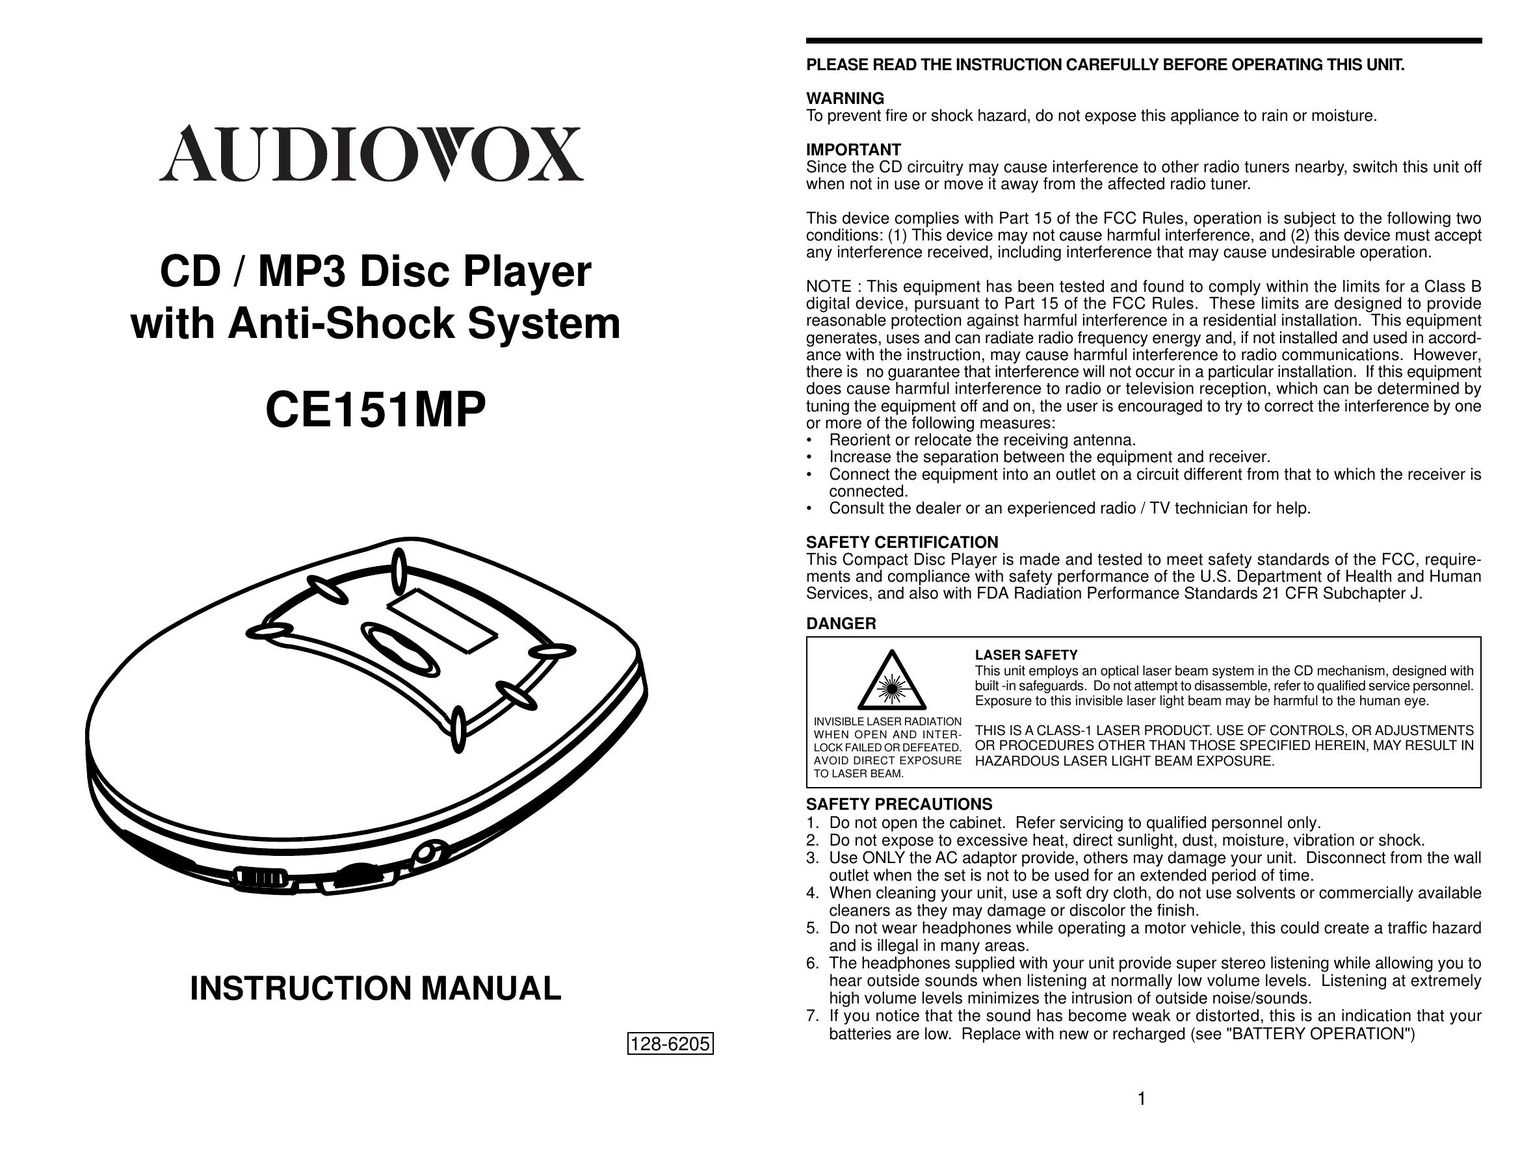 Audiovox CE151MP MP3 Player User Manual